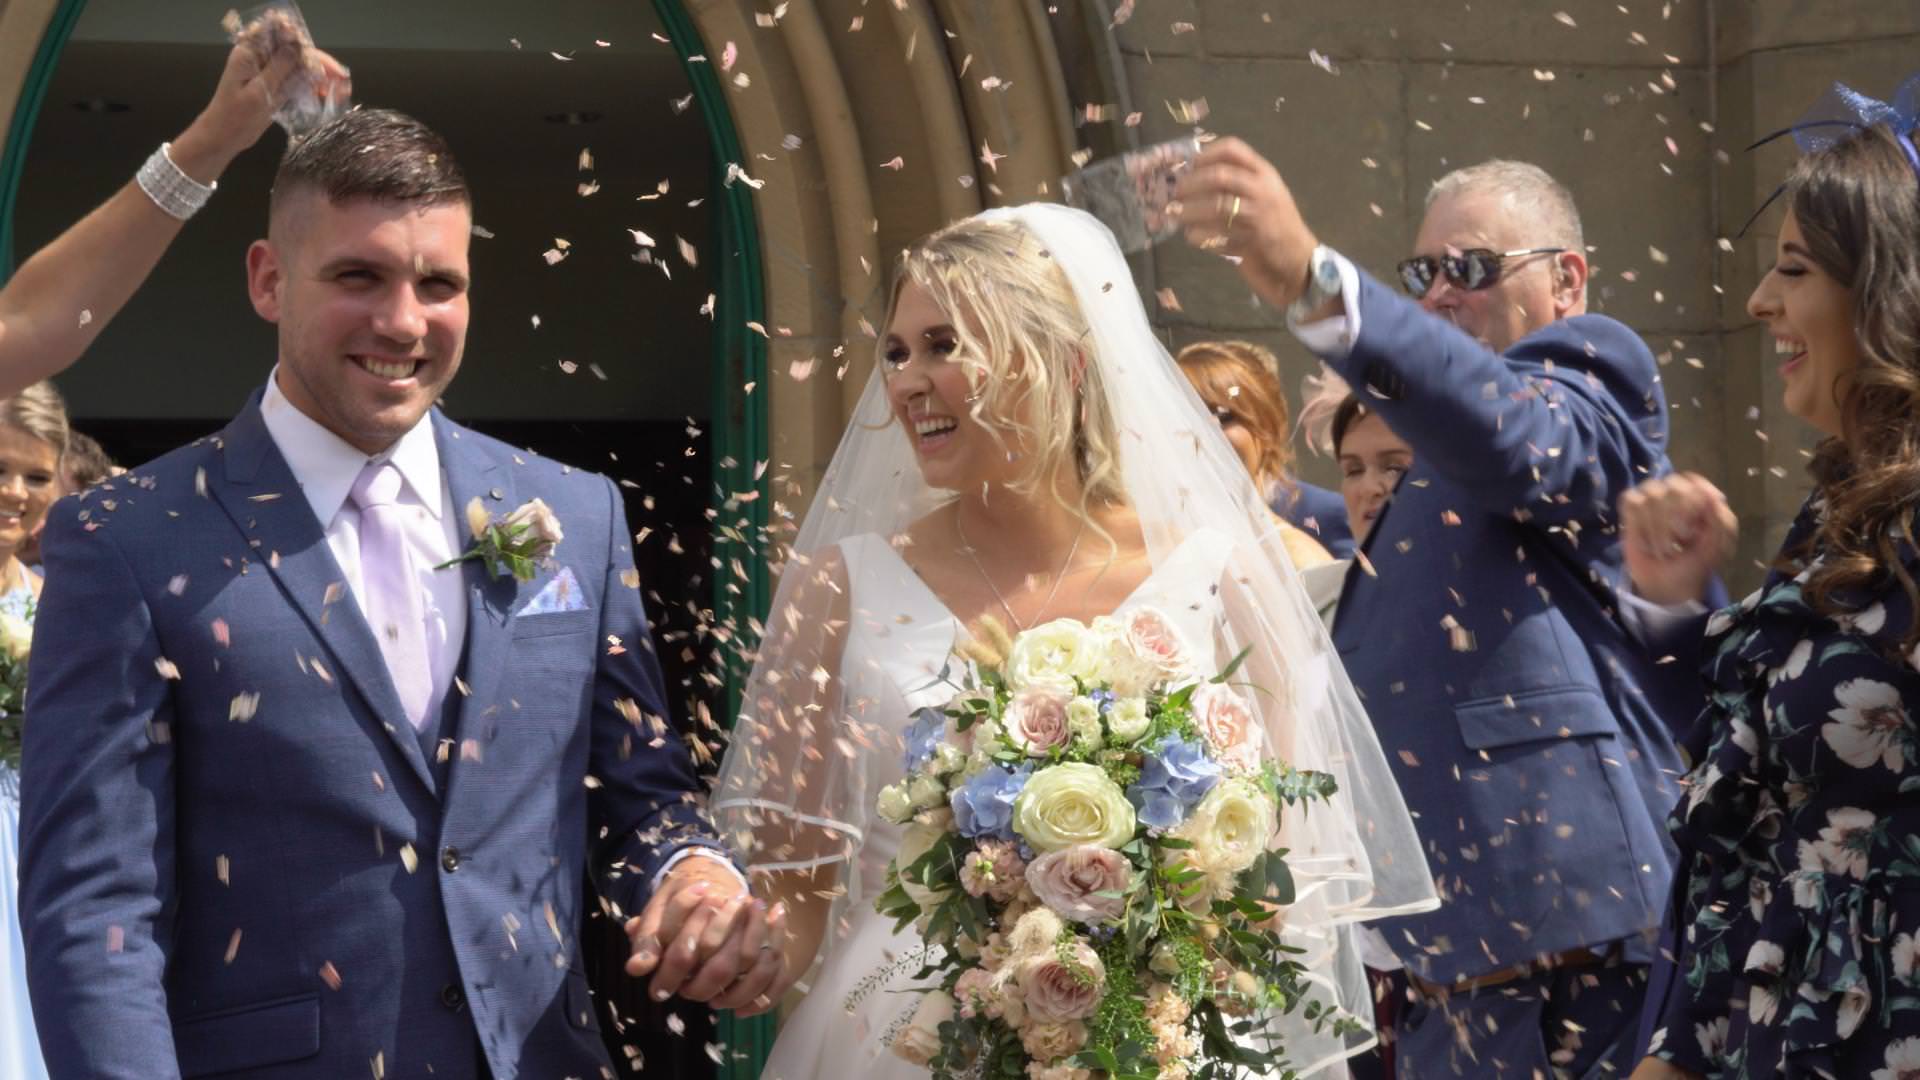 a wedding video still outside St Johns Church as they walk through confetti